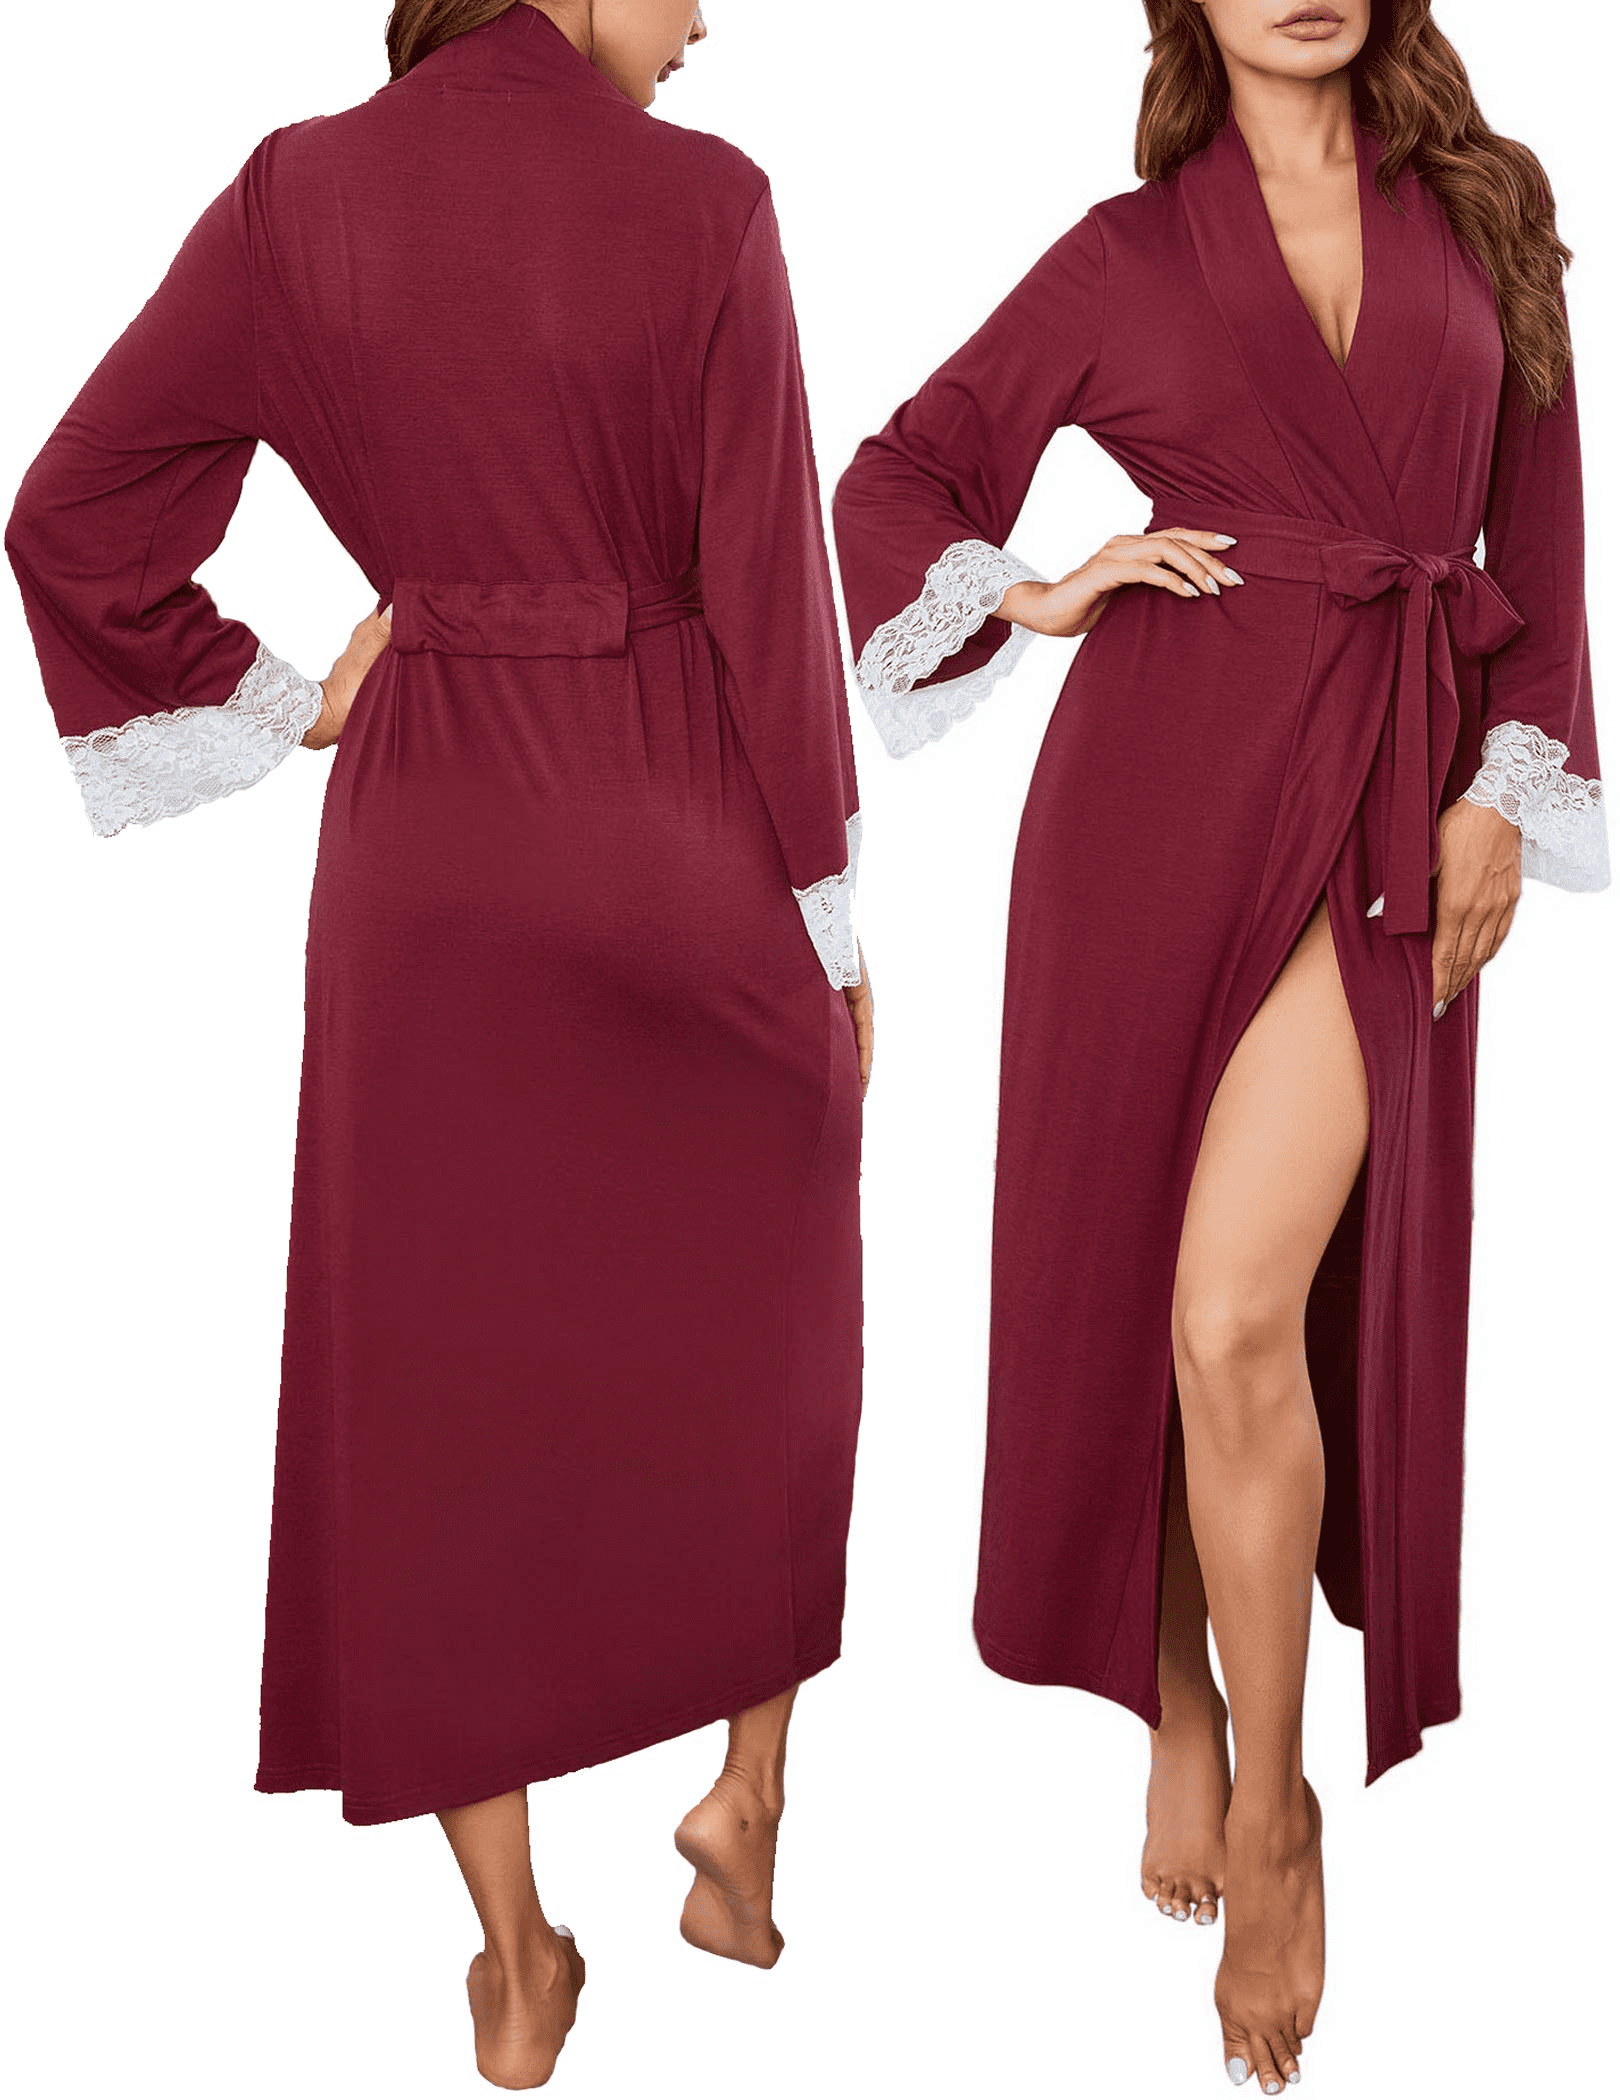 Women Plus Size Kimono Robes Cotton Knee Length Robe Knit Bathrobe Soft Sleepwear Ladies Loungewear XL-5XL 